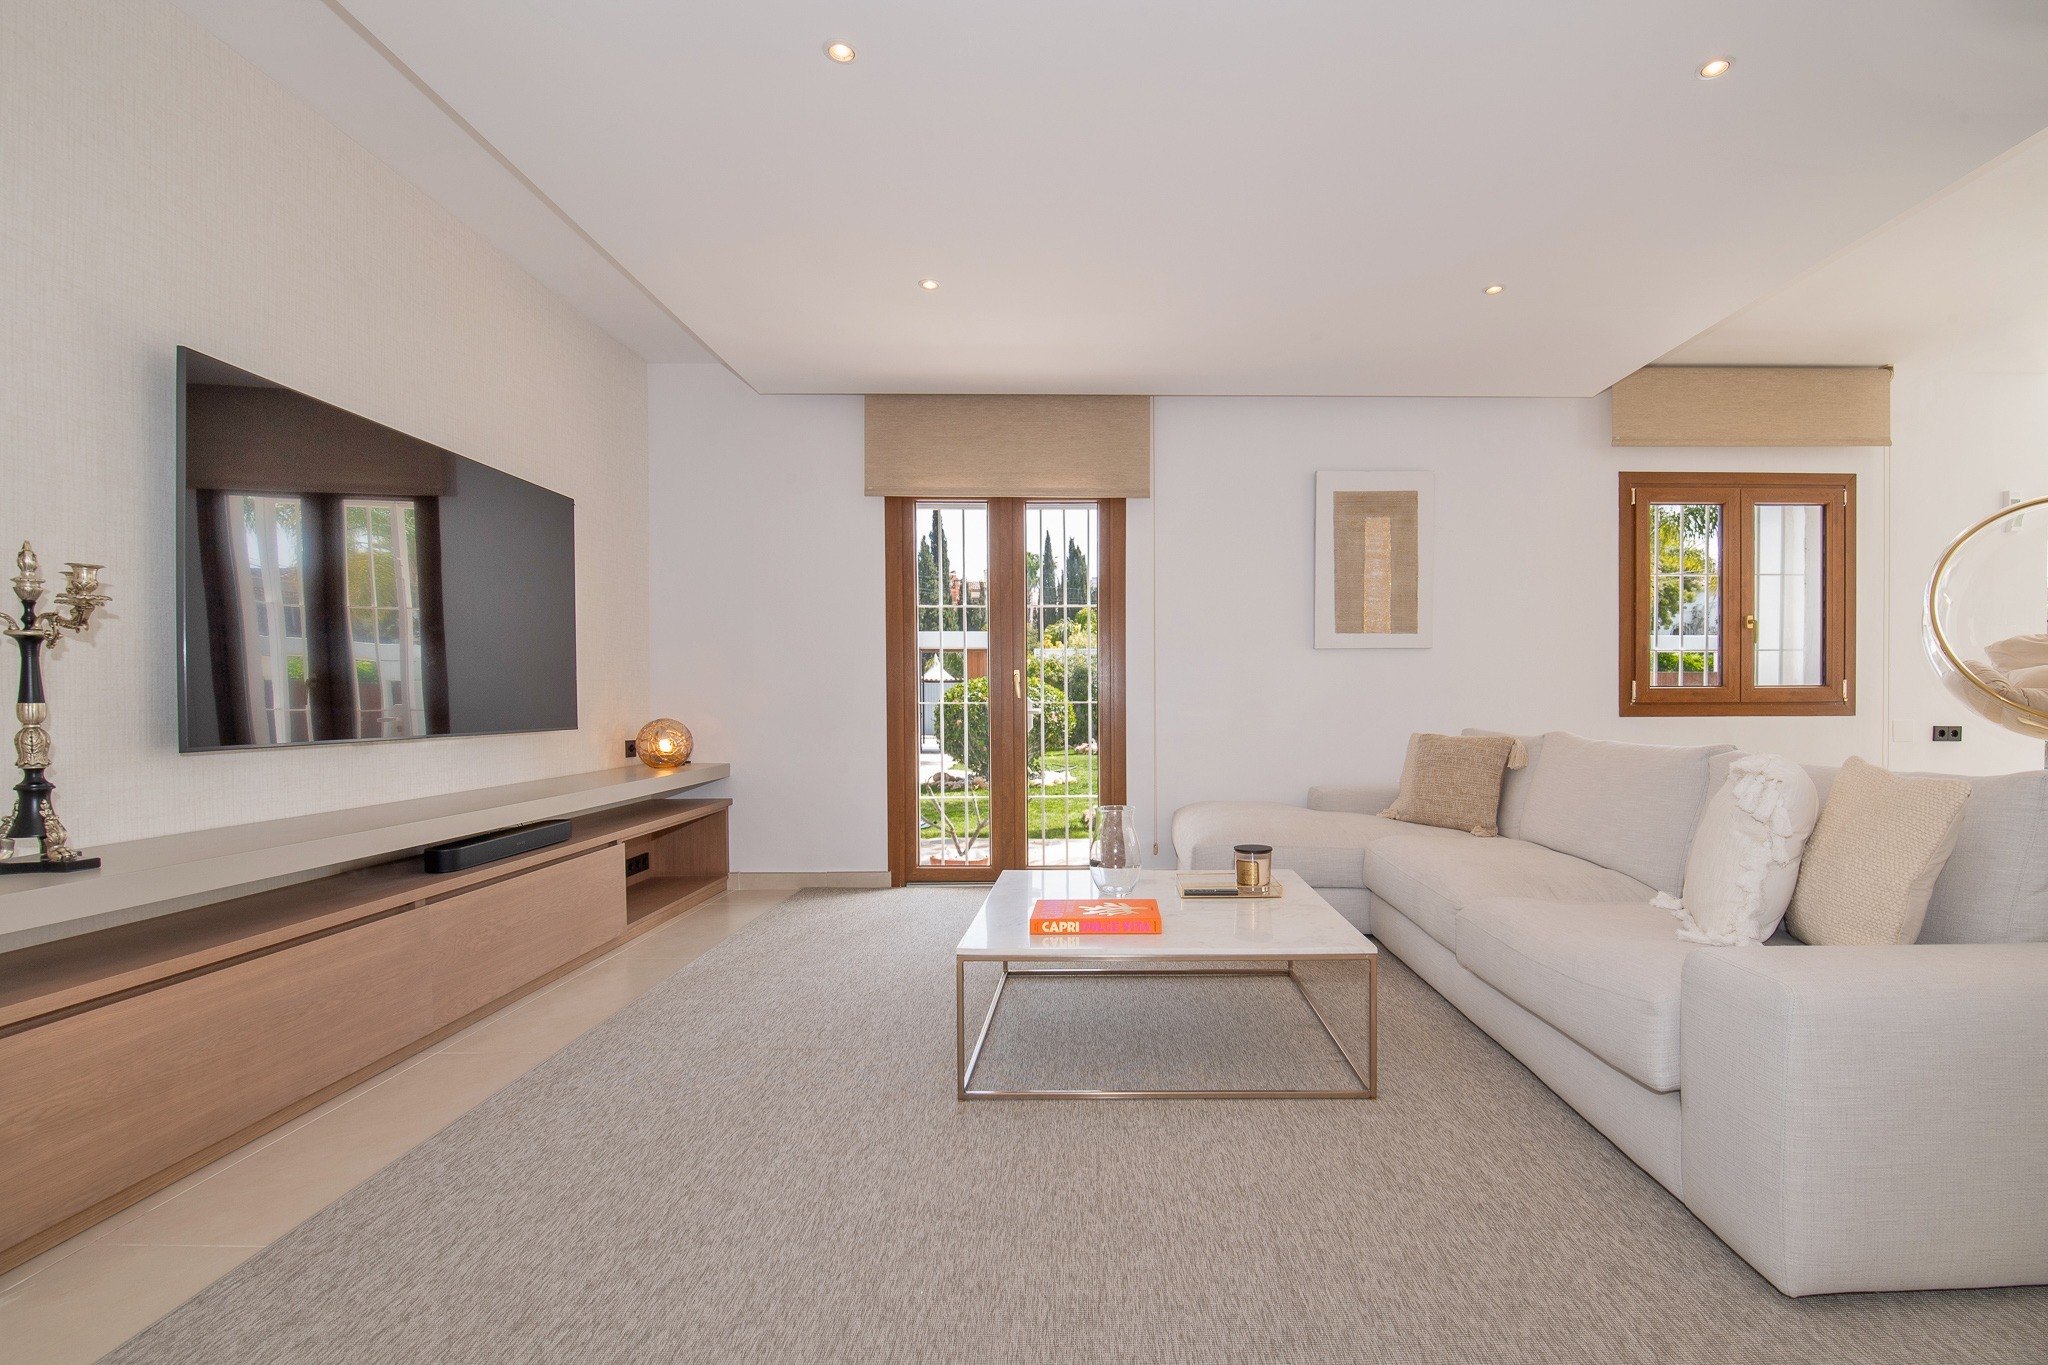 Villa in Spanish style living room - Nueva Andalucia - Marbella